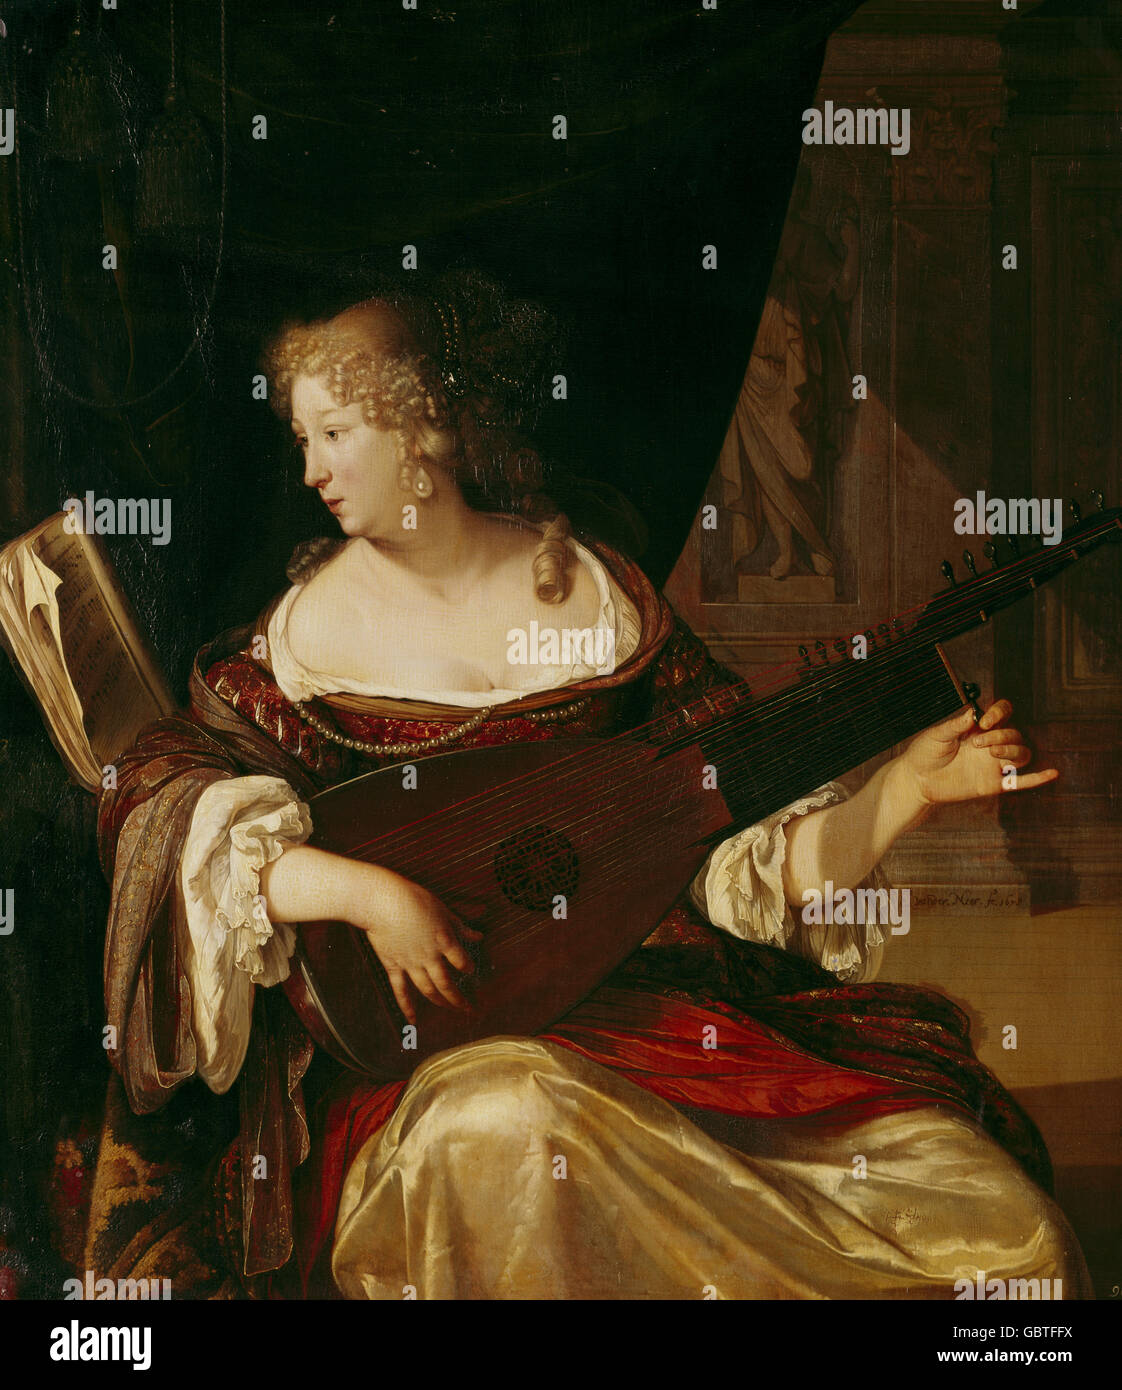 Kunst, Neer, Églon Hendrick van der (1634 - 1703), peinture, luth 'Femme' tuning, huile sur panneau, 1678, Alte Pinakothek, Munich, Banque D'Images